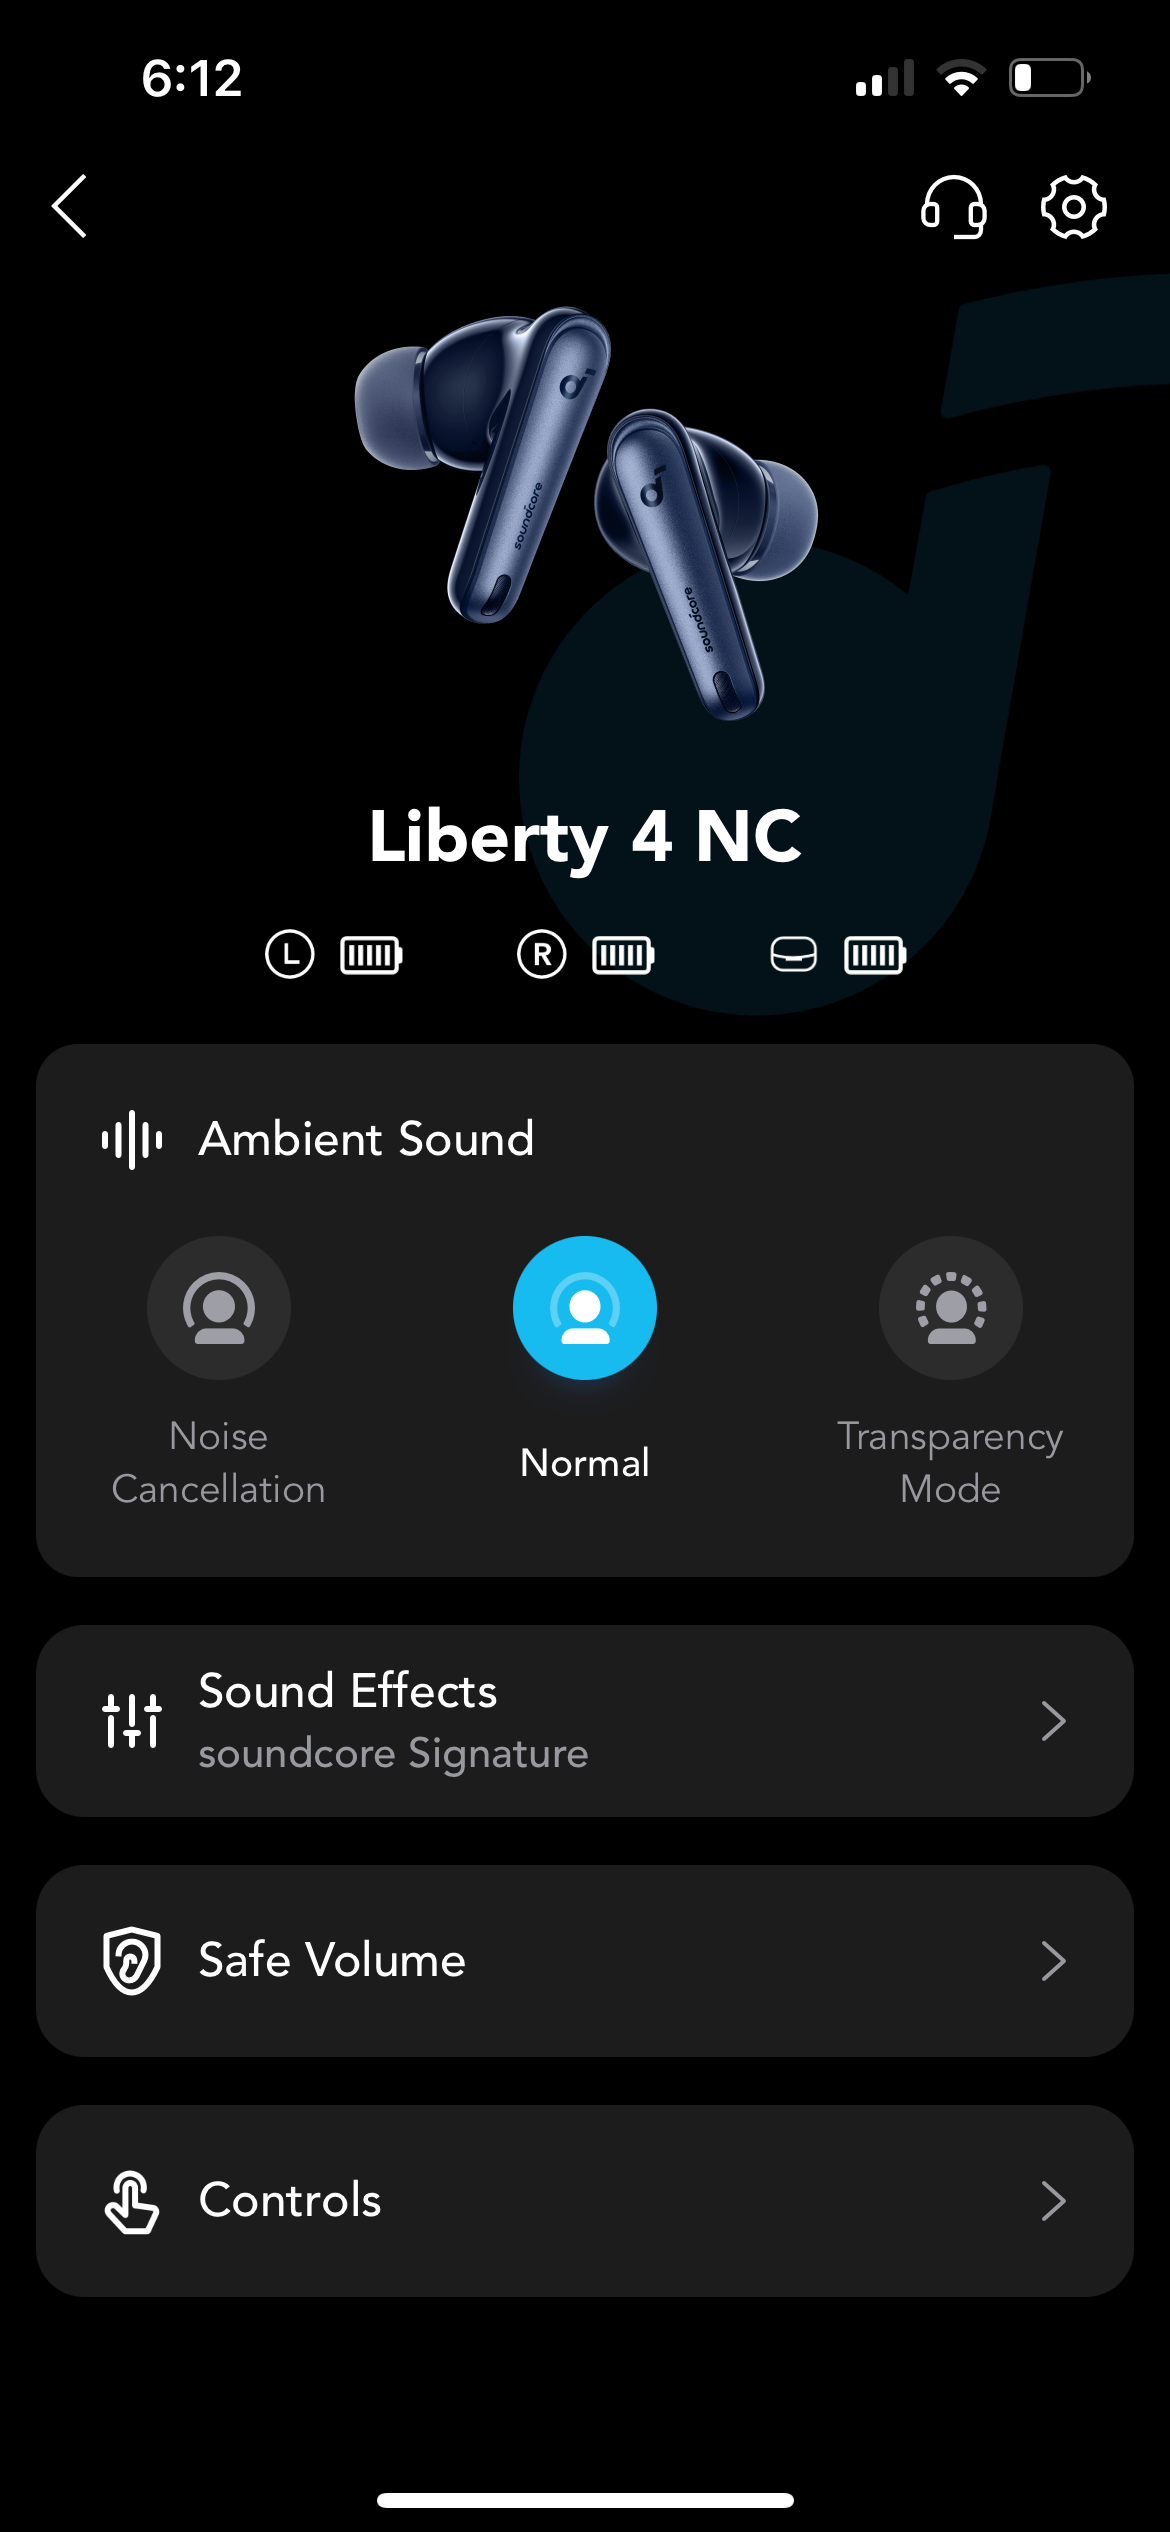 Soundcore Liberty 4 NC app home screen